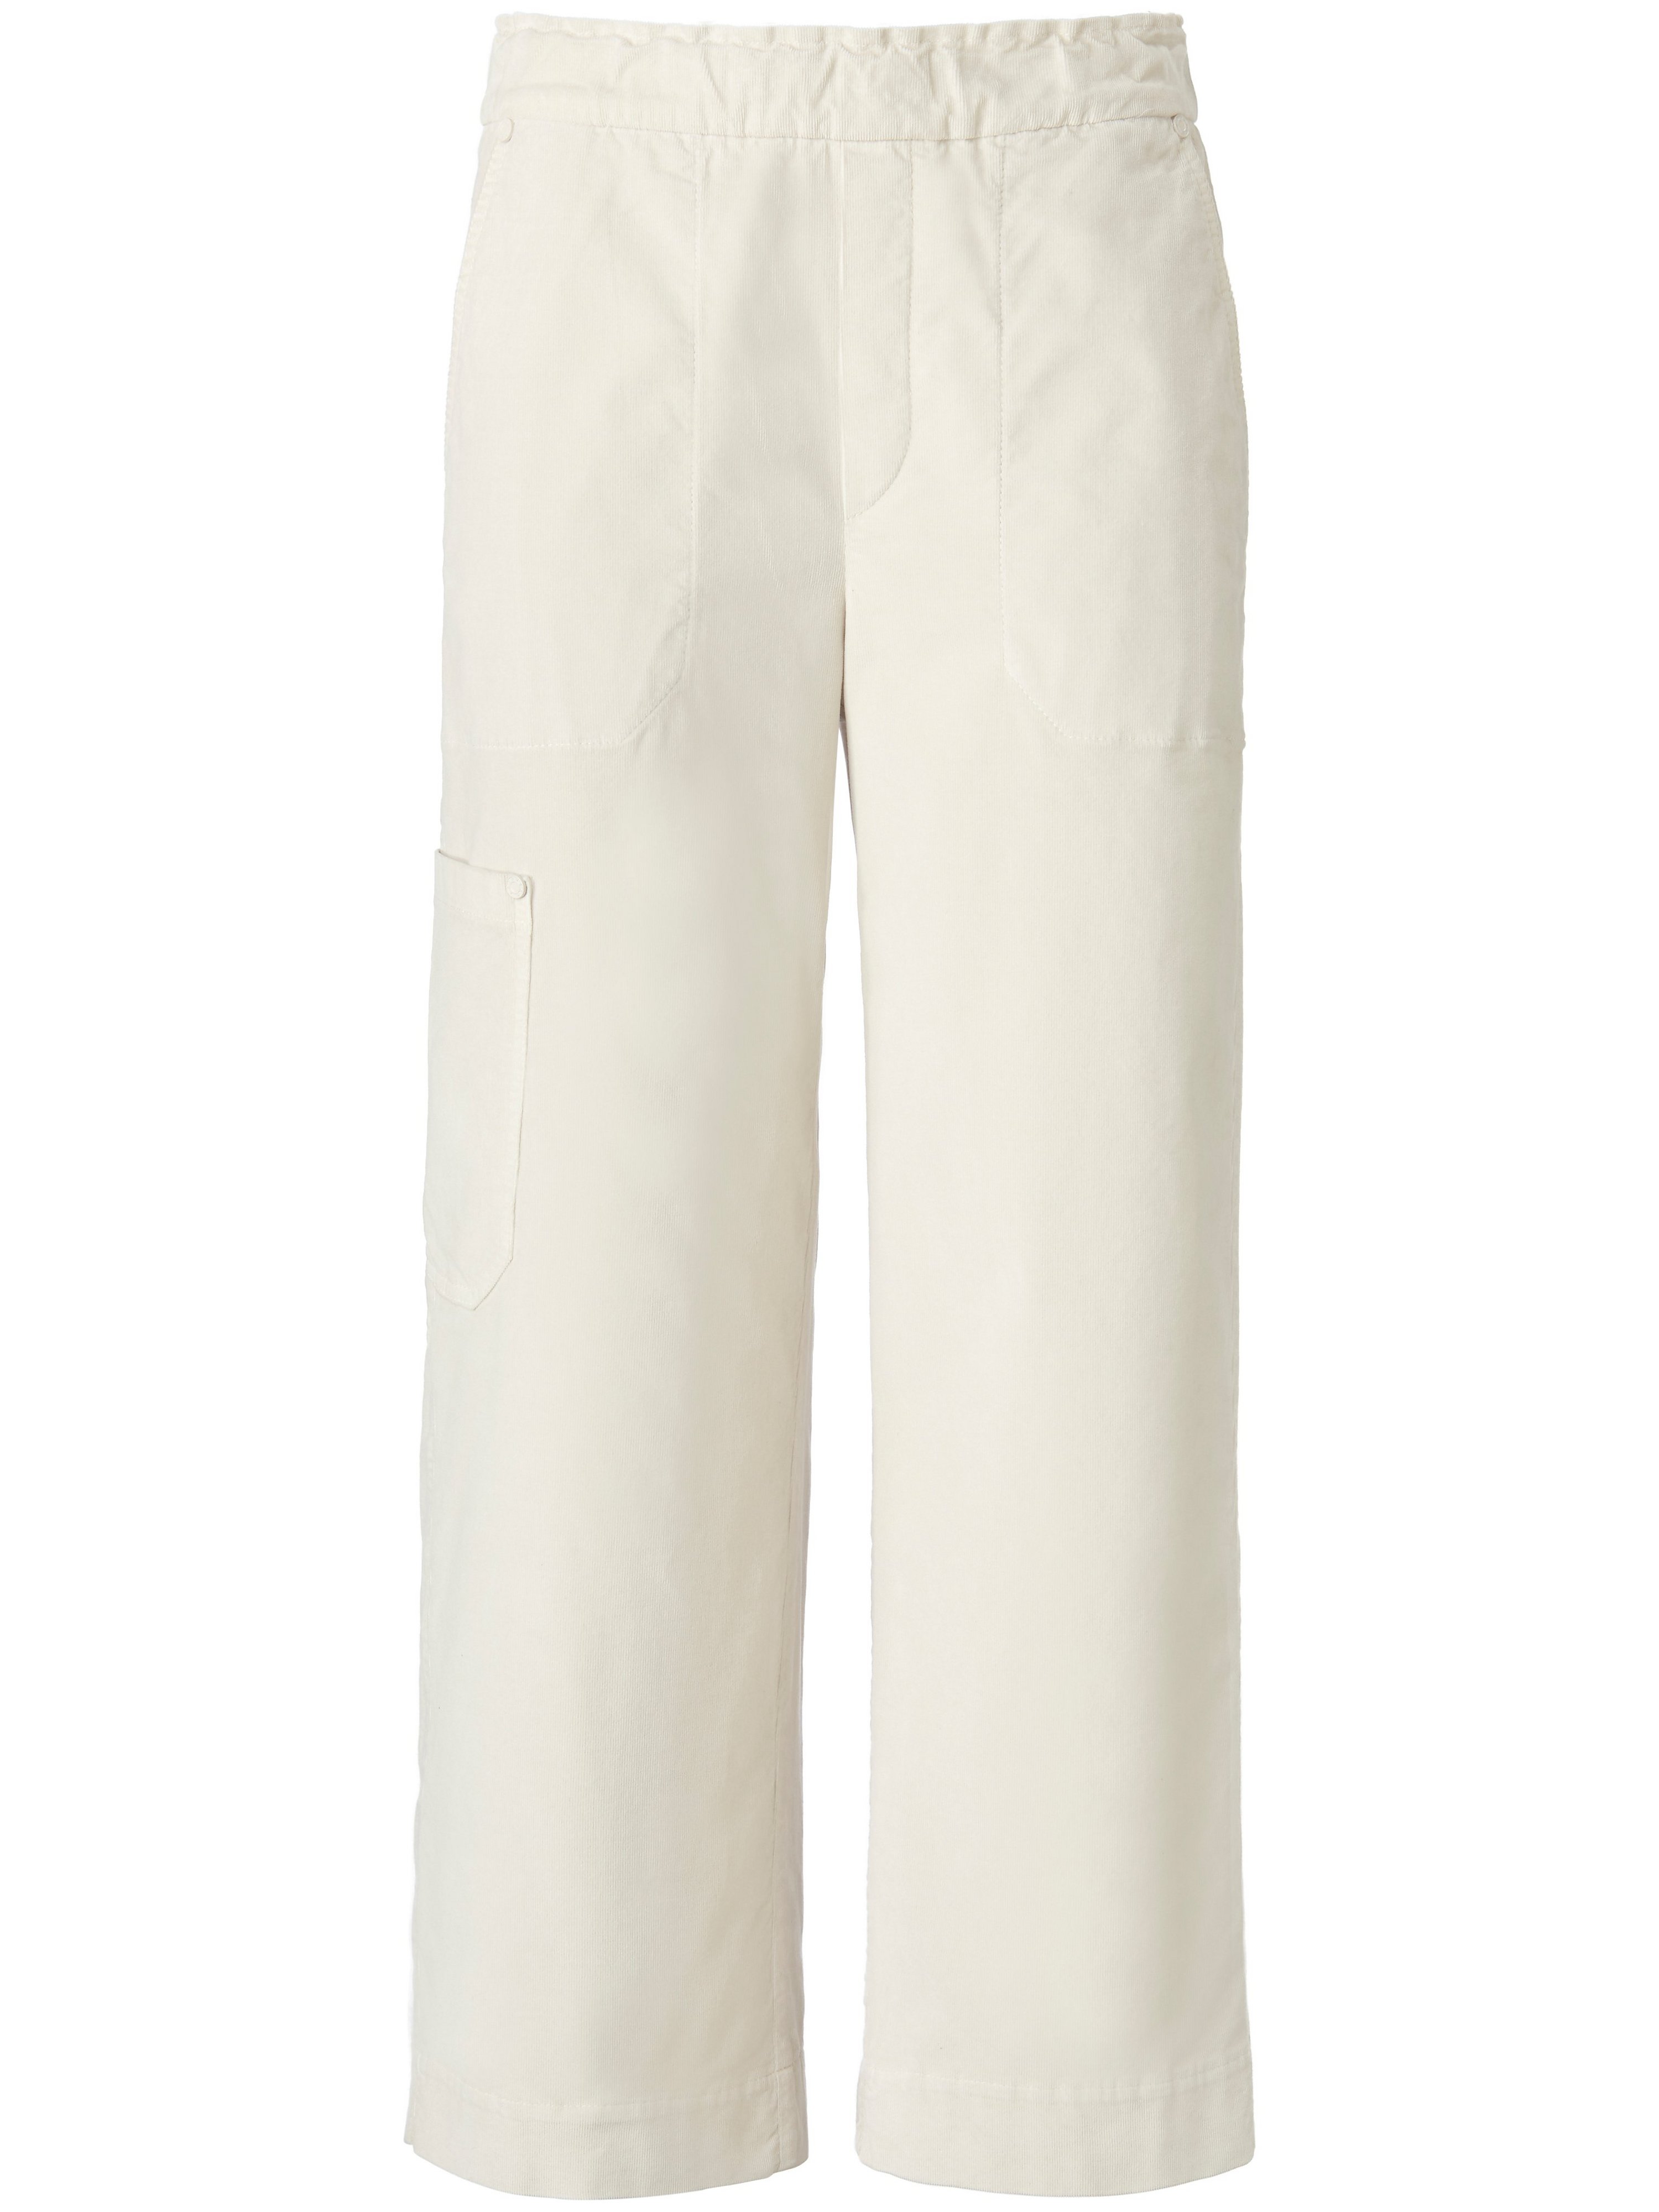 Le pantalon 7/8 à enfiler  MAC DAYDREAM blanc